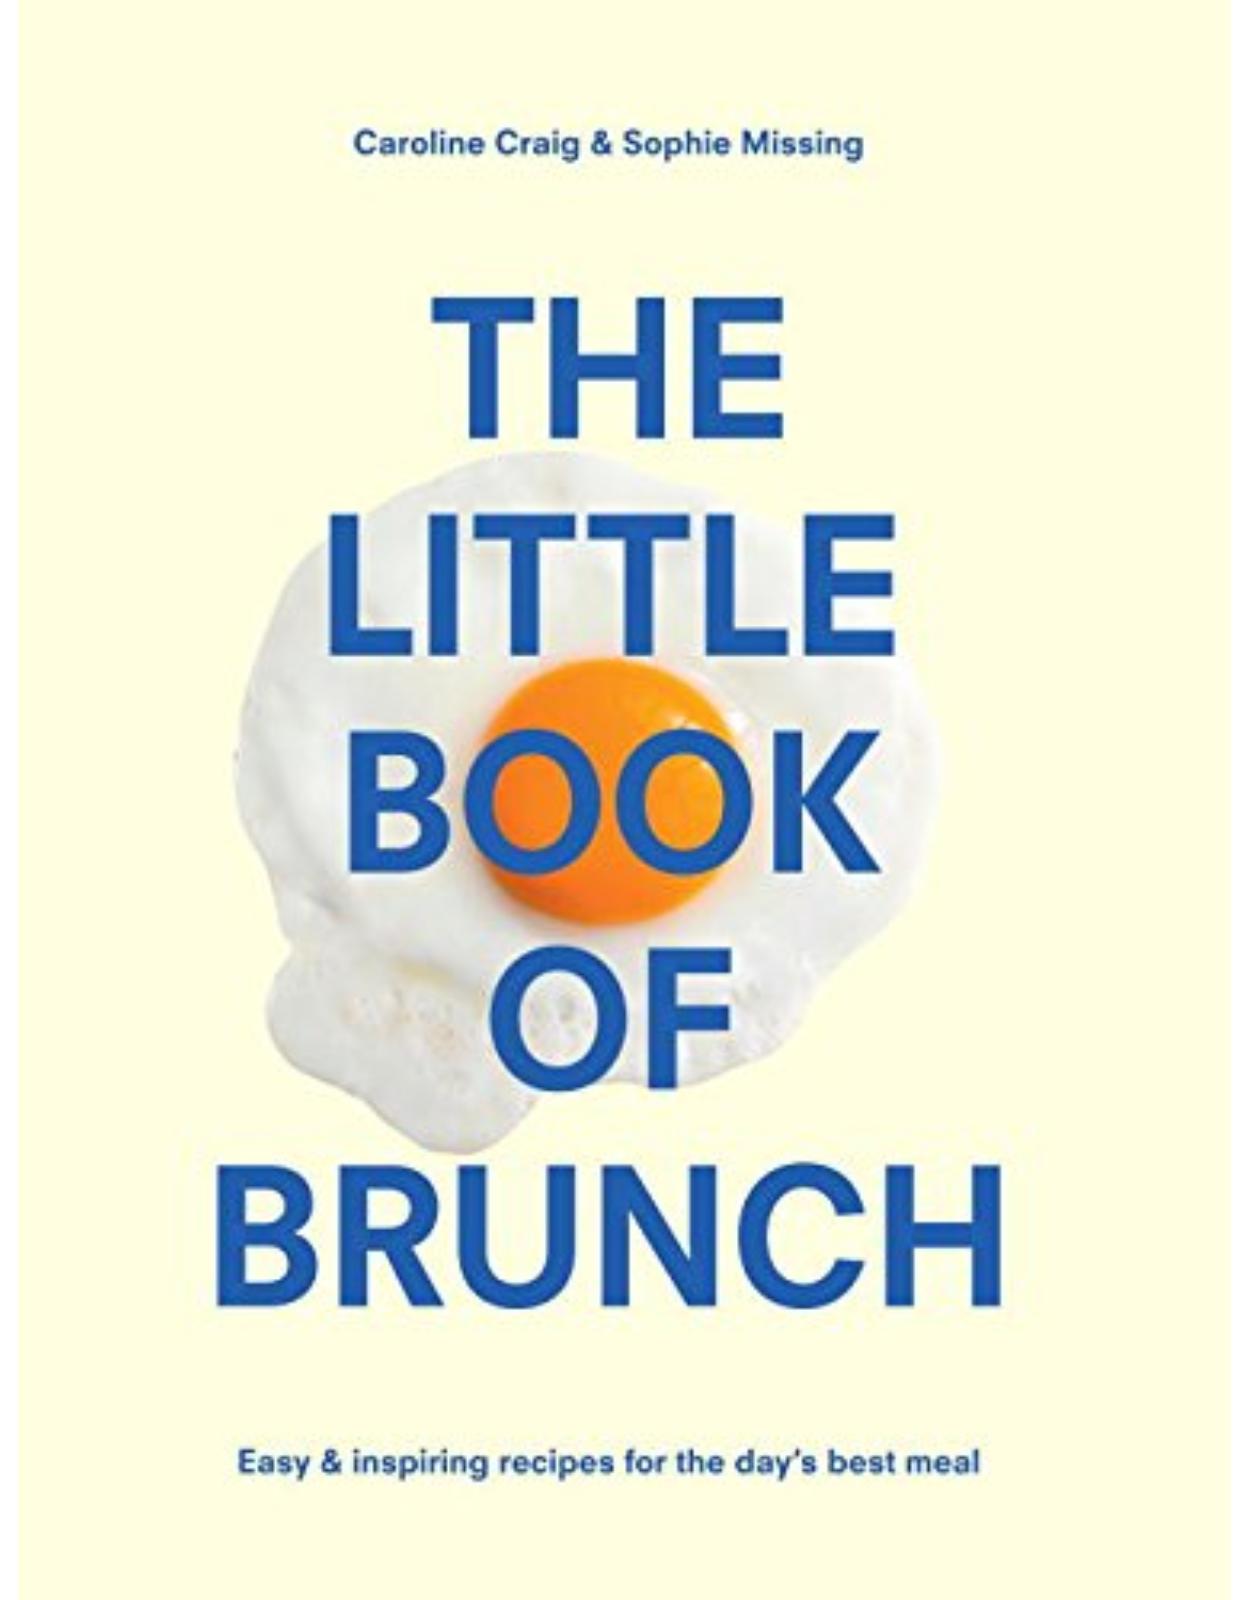 The Little Book of Brunch